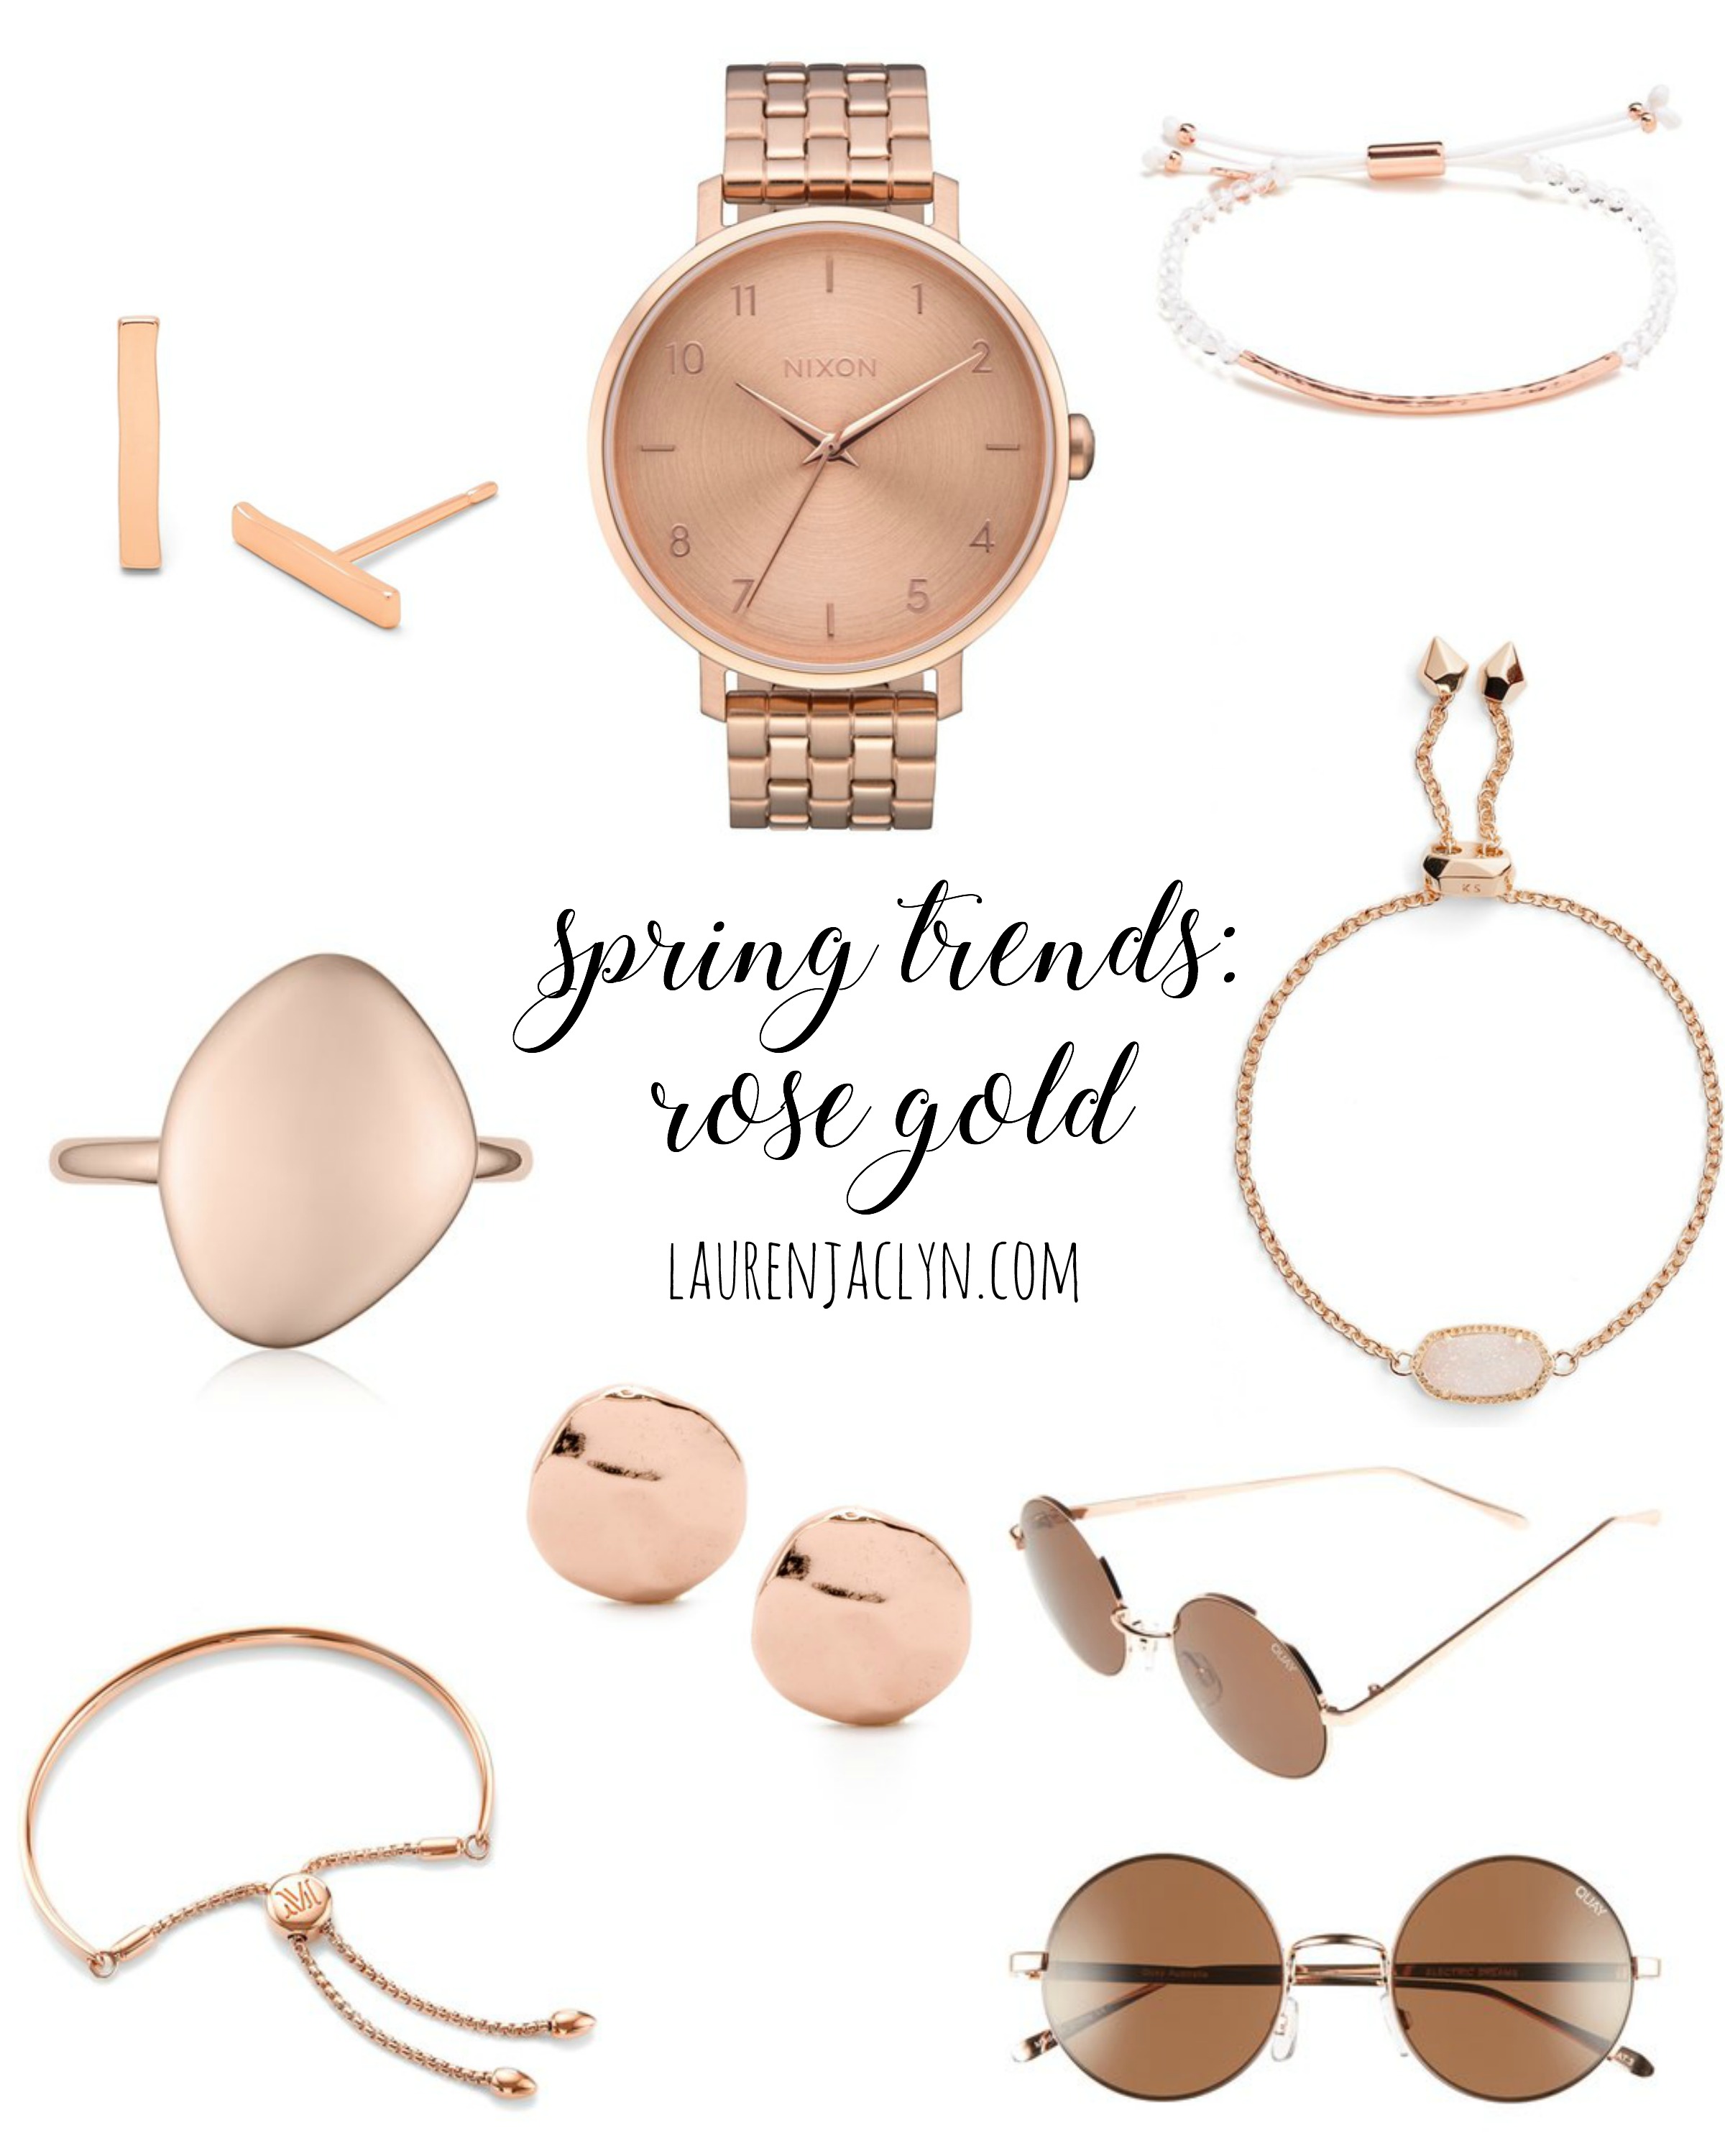 Spring Trends: Rose Gold - LaurenJaclyn.com